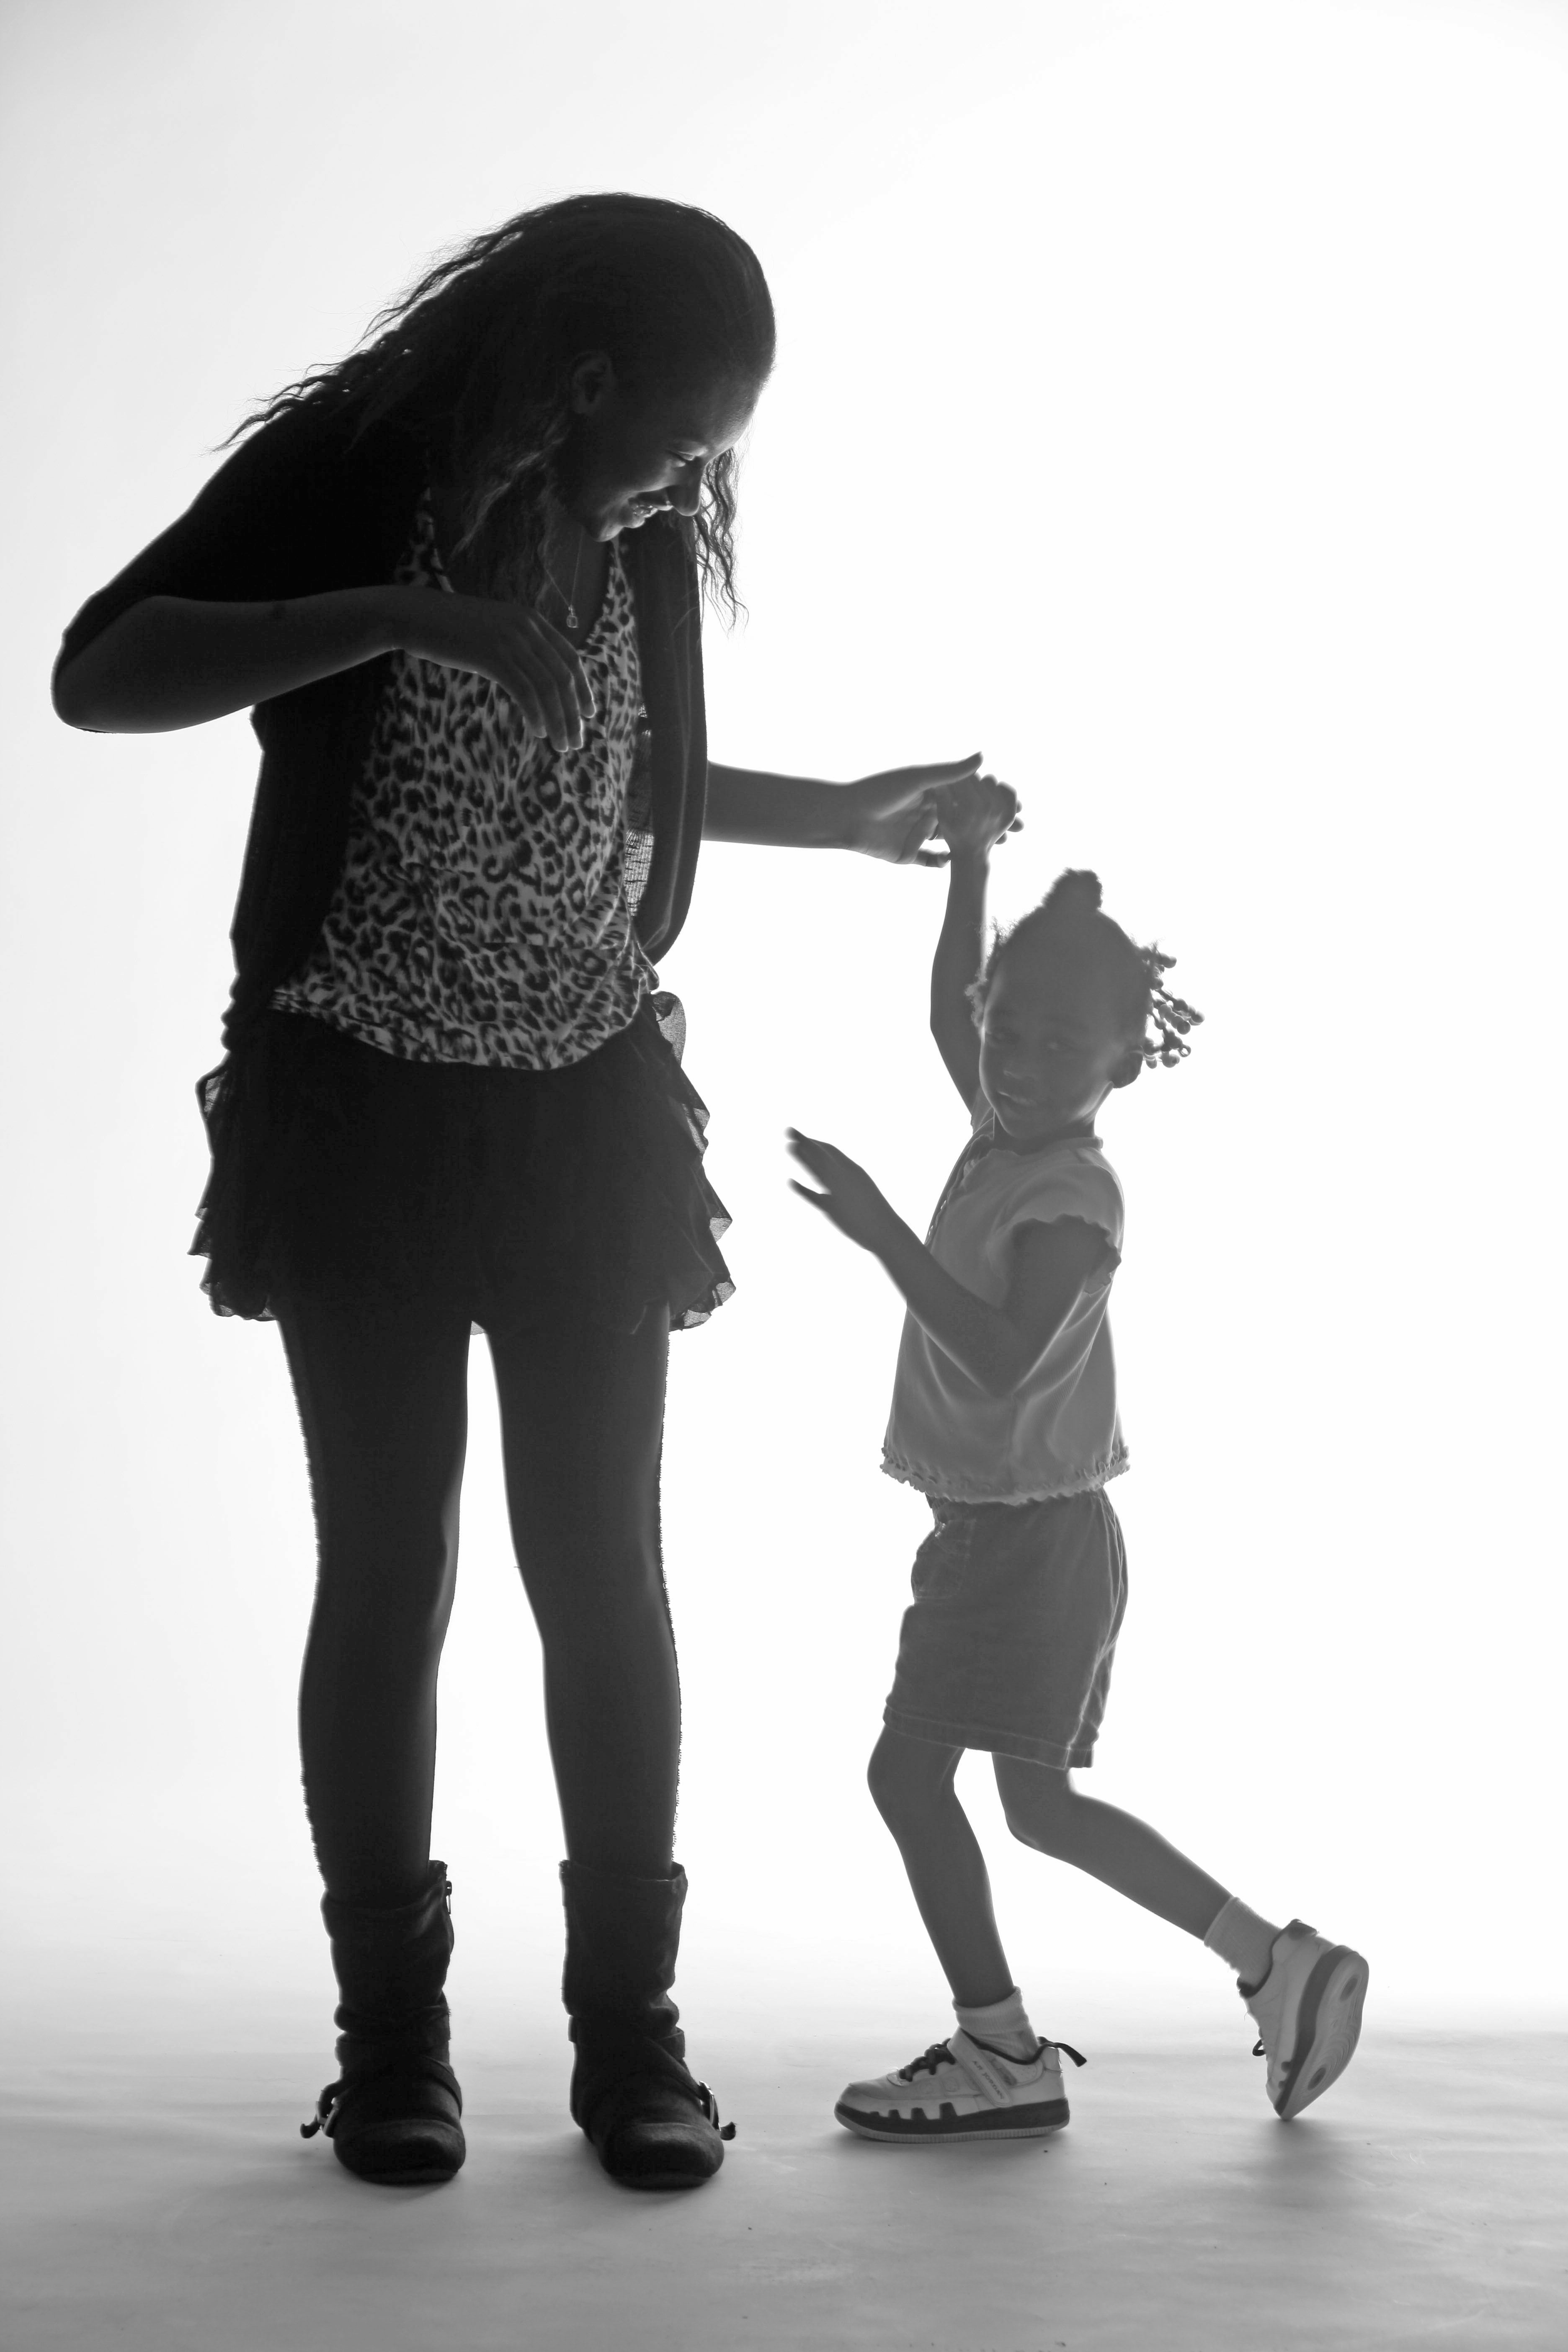 SEGURO: Madre con Hija Bailando